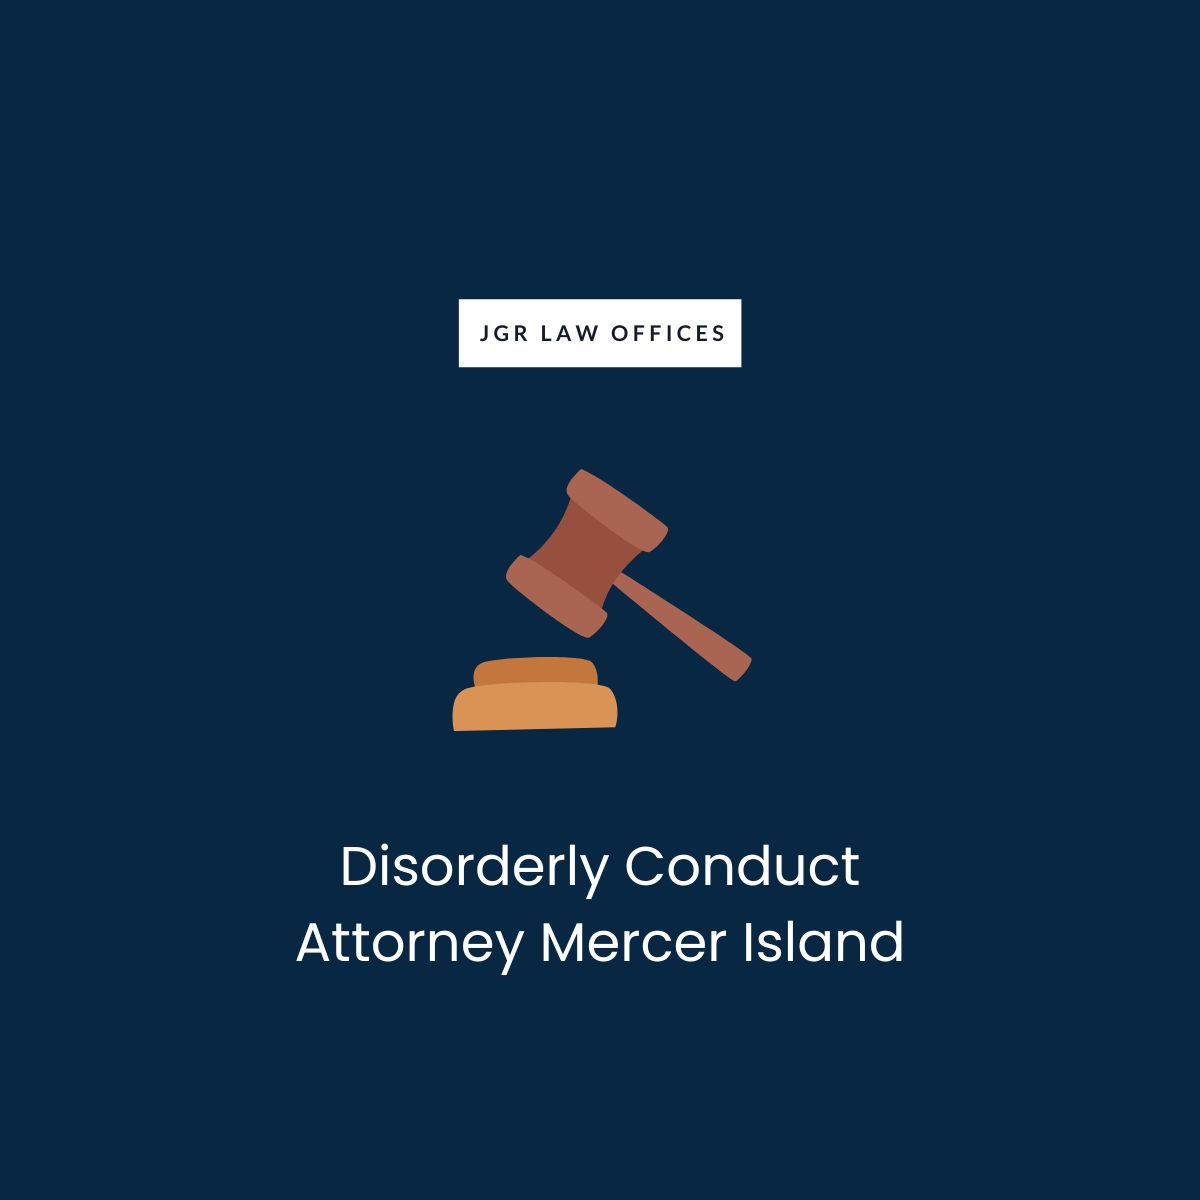 Disorderly Conduct Lawyer Mercer Island Disorderly Conduct Disorderly Conduct